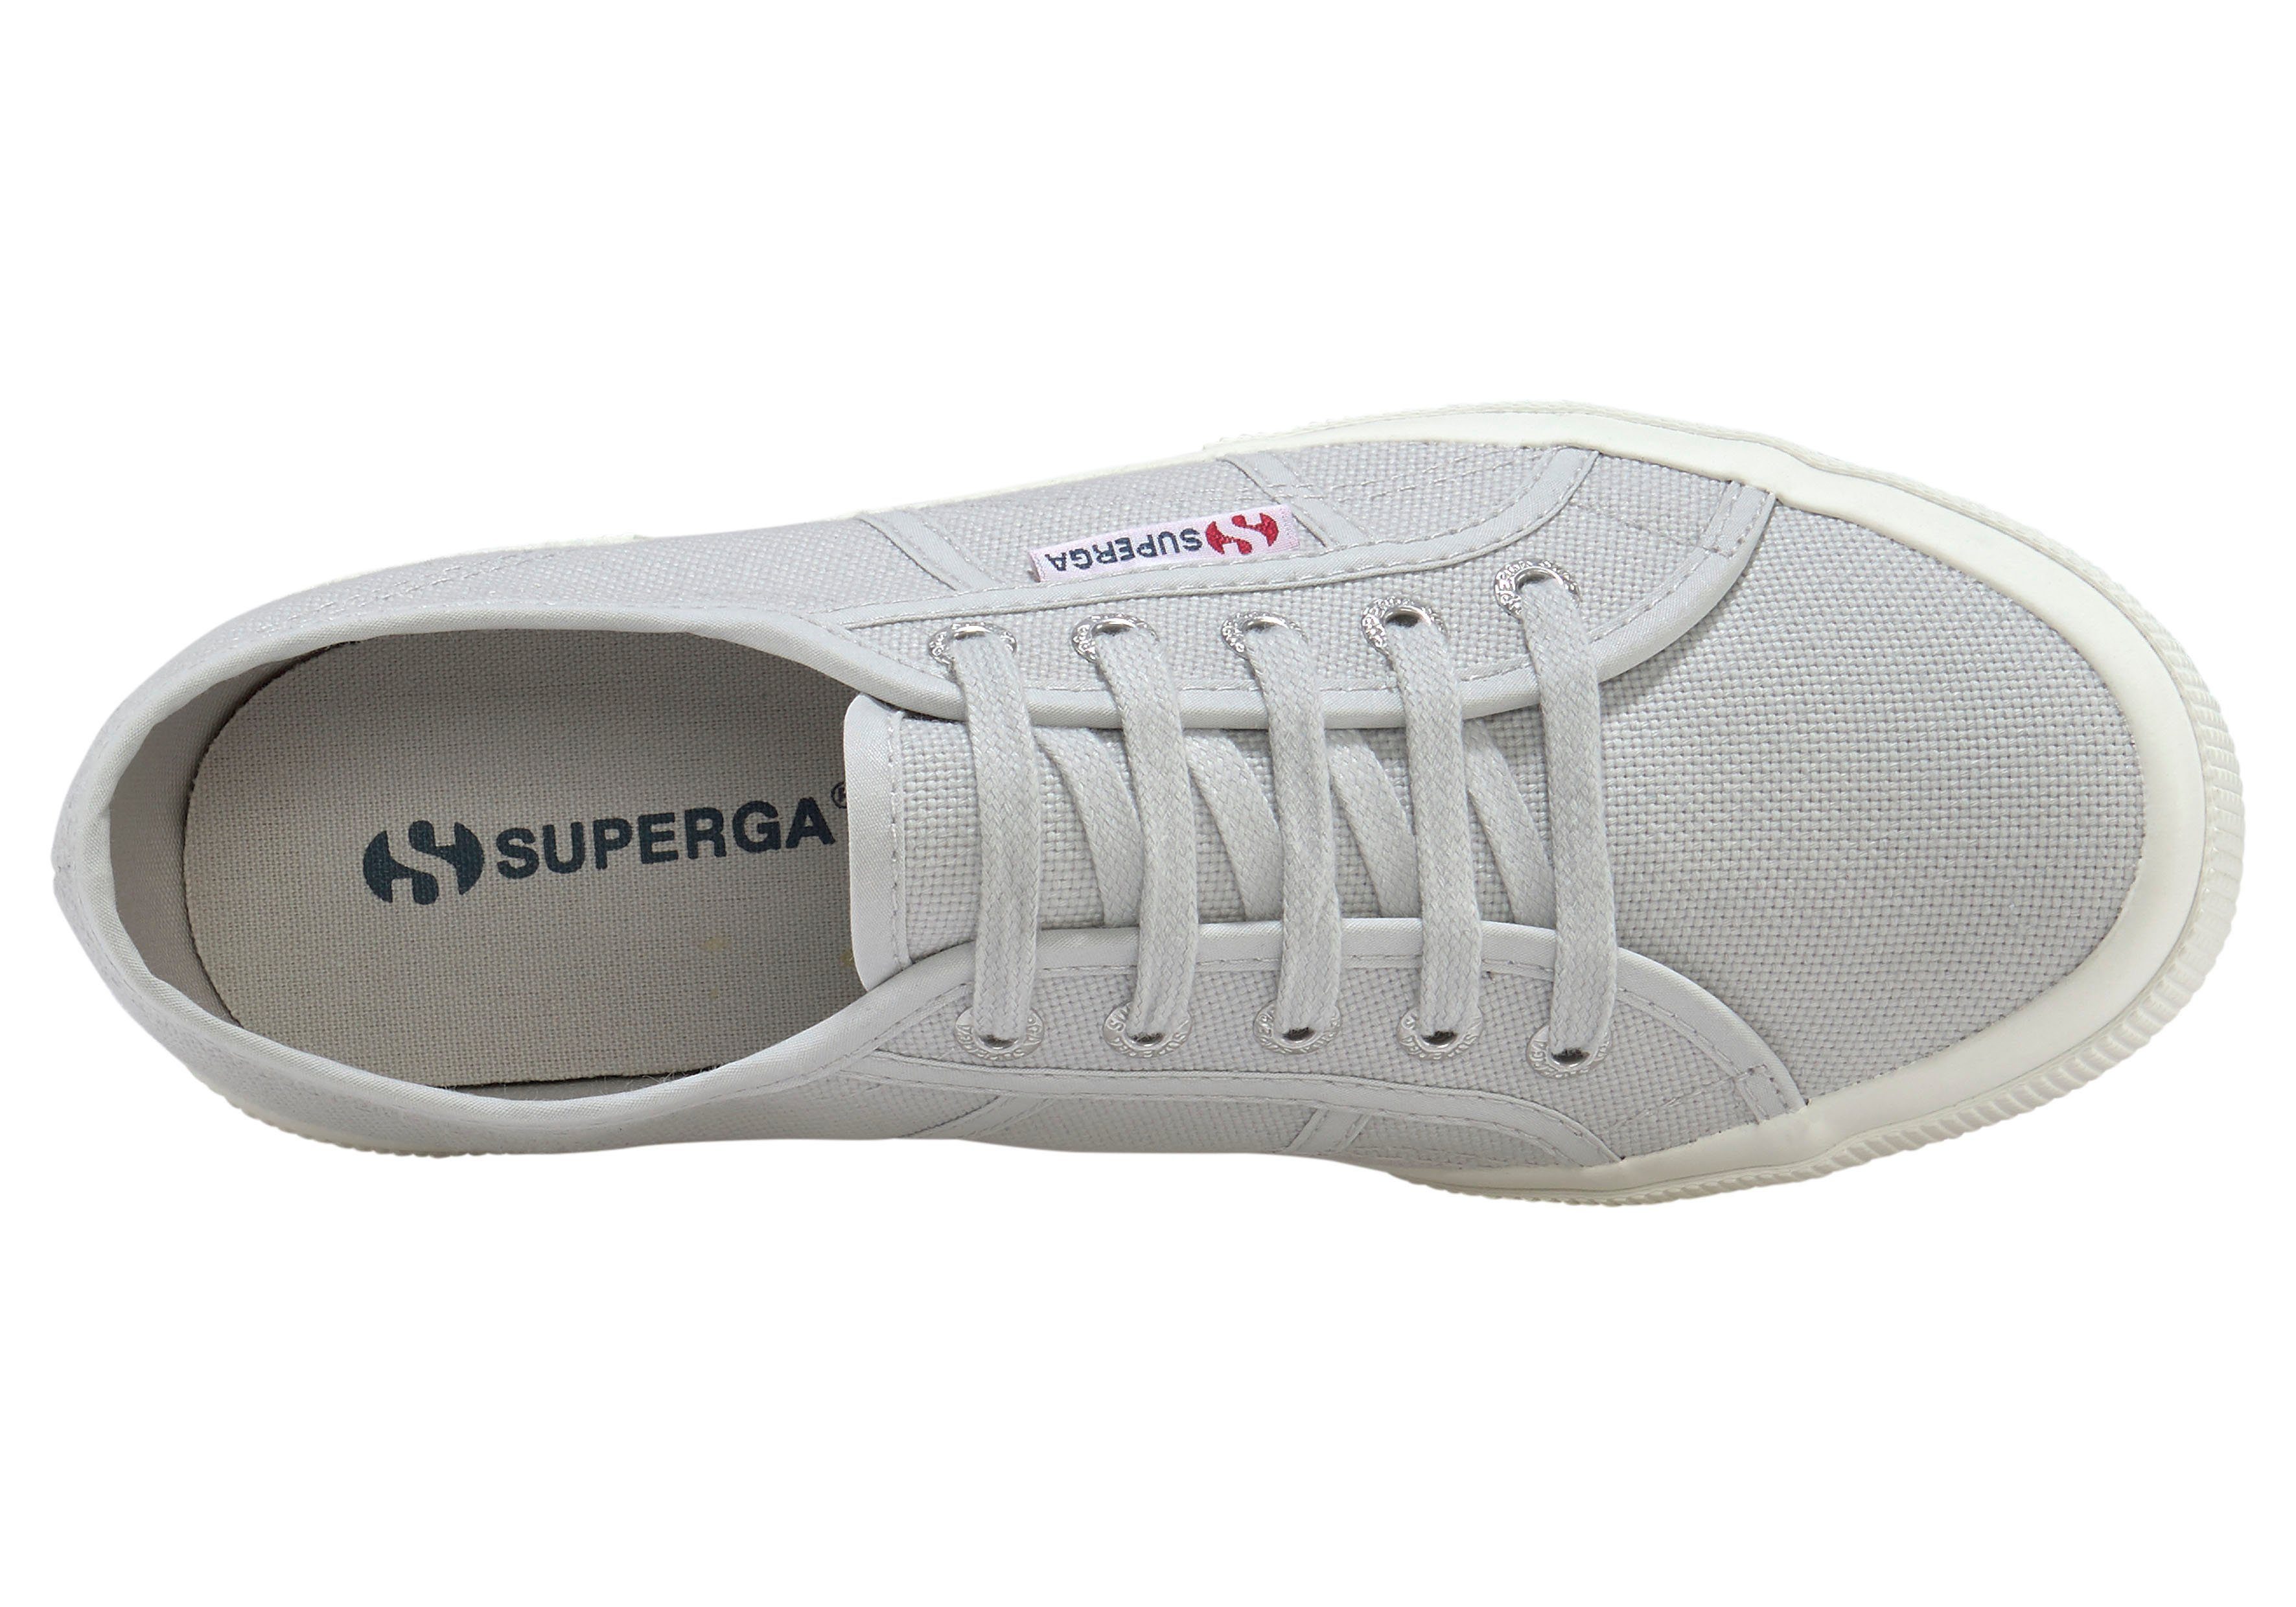 Superga Classic Sneaker mit Canvas-Obermaterial Cotu klassischem grey-ash